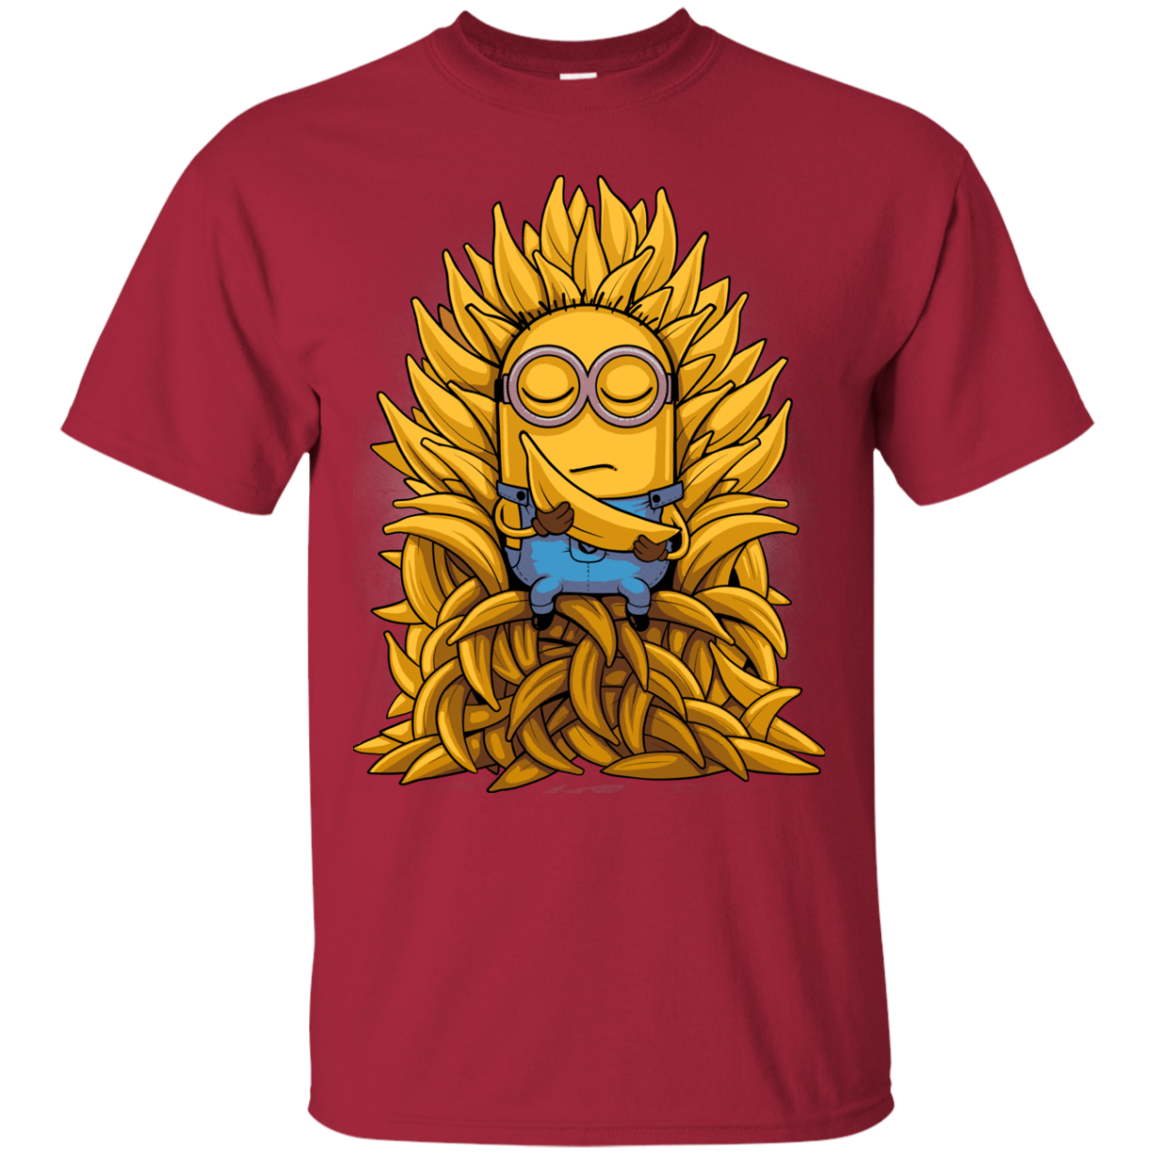 Banana Throne T-Shirt